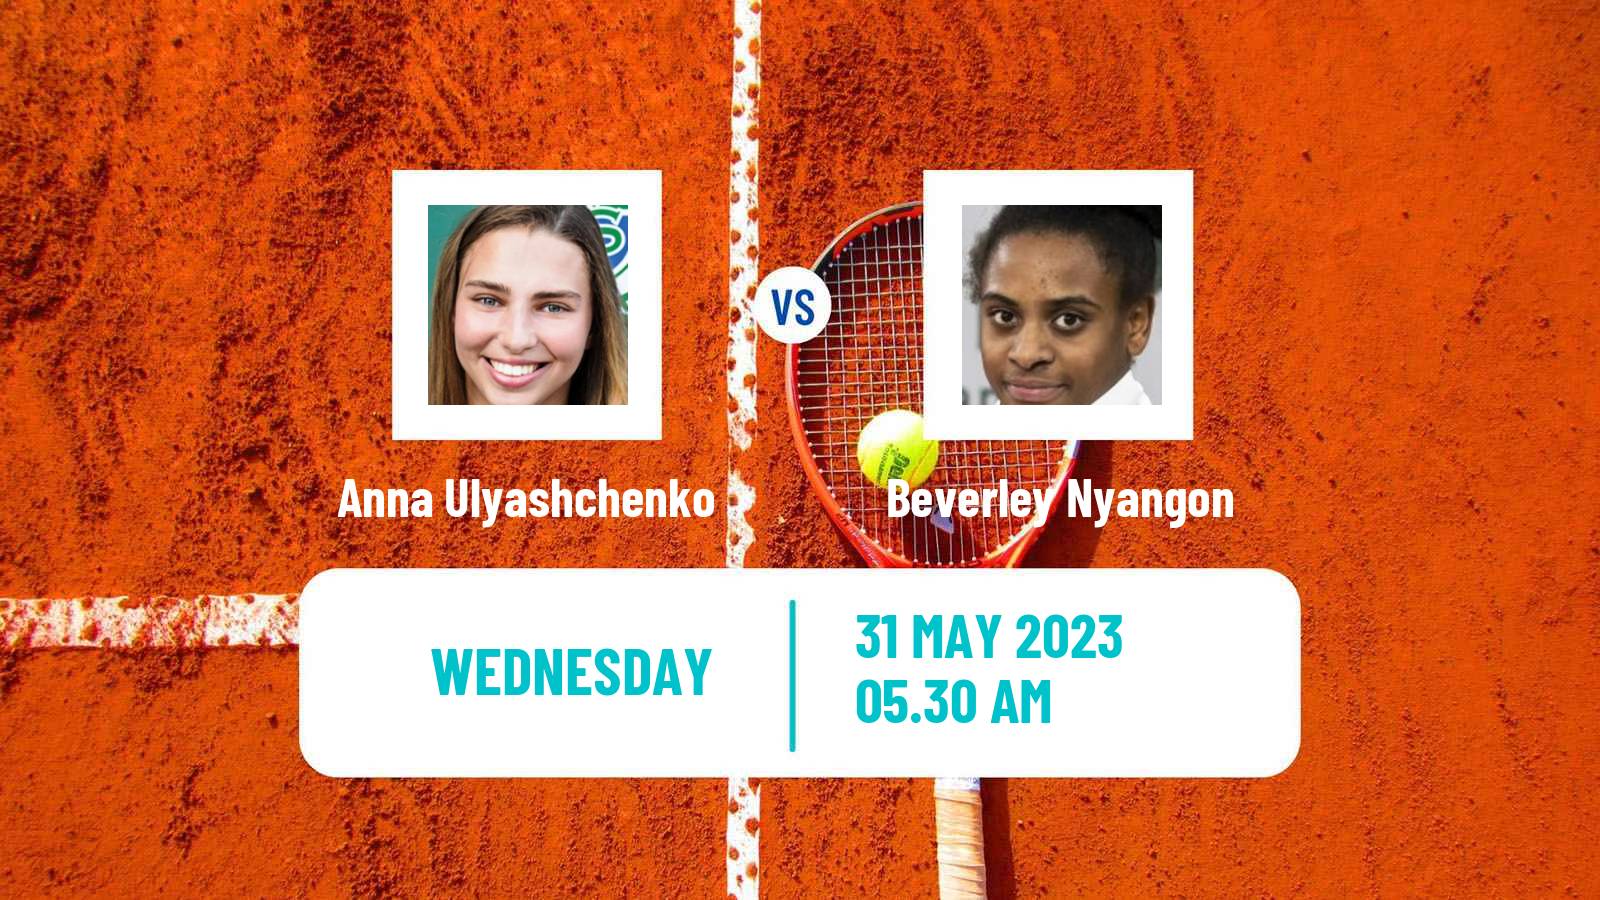 Tennis ITF W15 Monastir 17 Women Anna Ulyashchenko - Beverley Nyangon